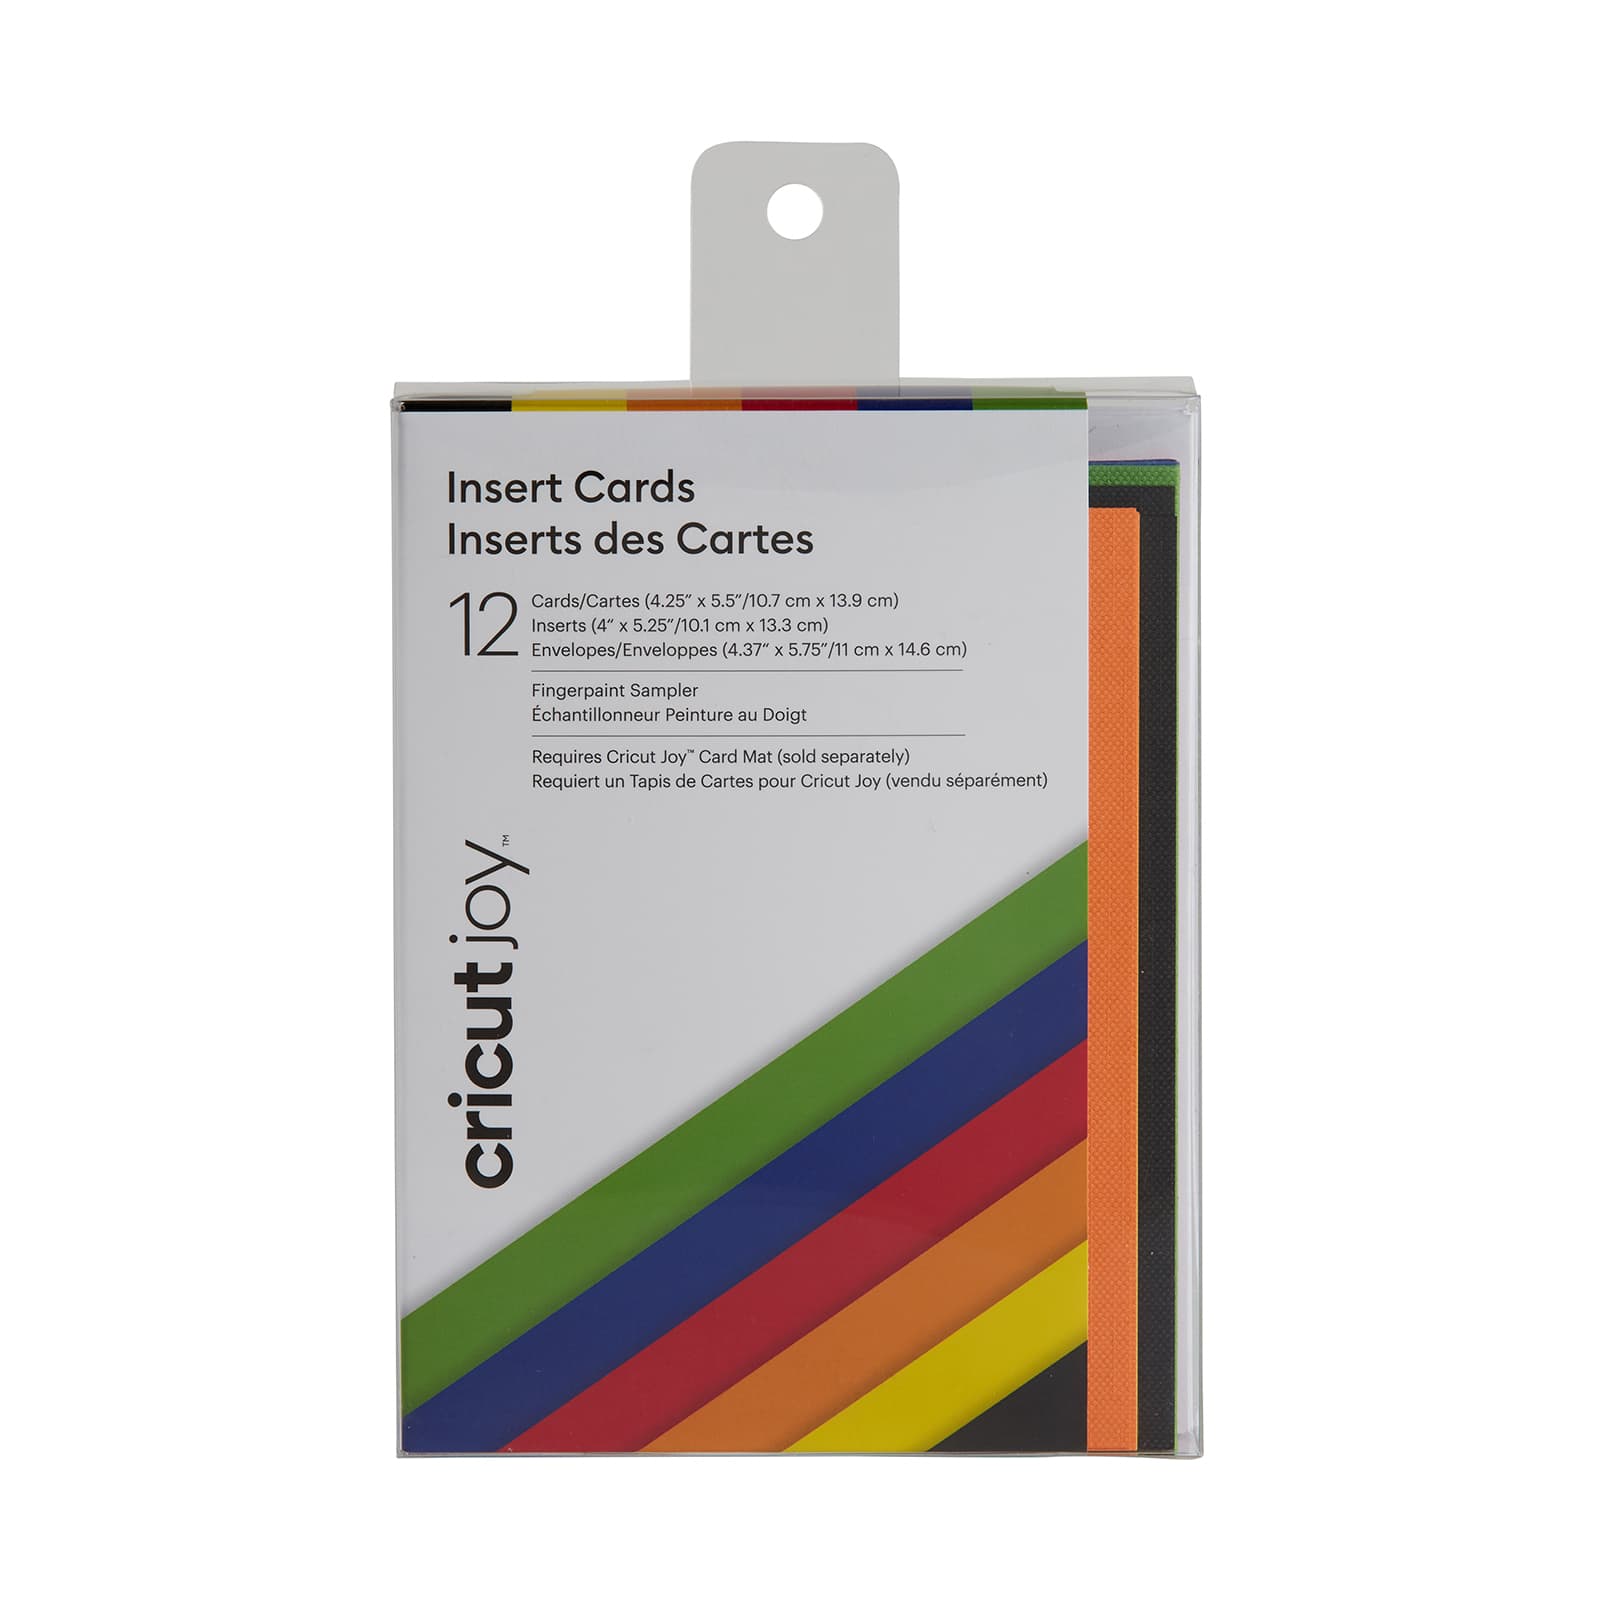 Sensei Cricut Insert Cards Sampler - R40